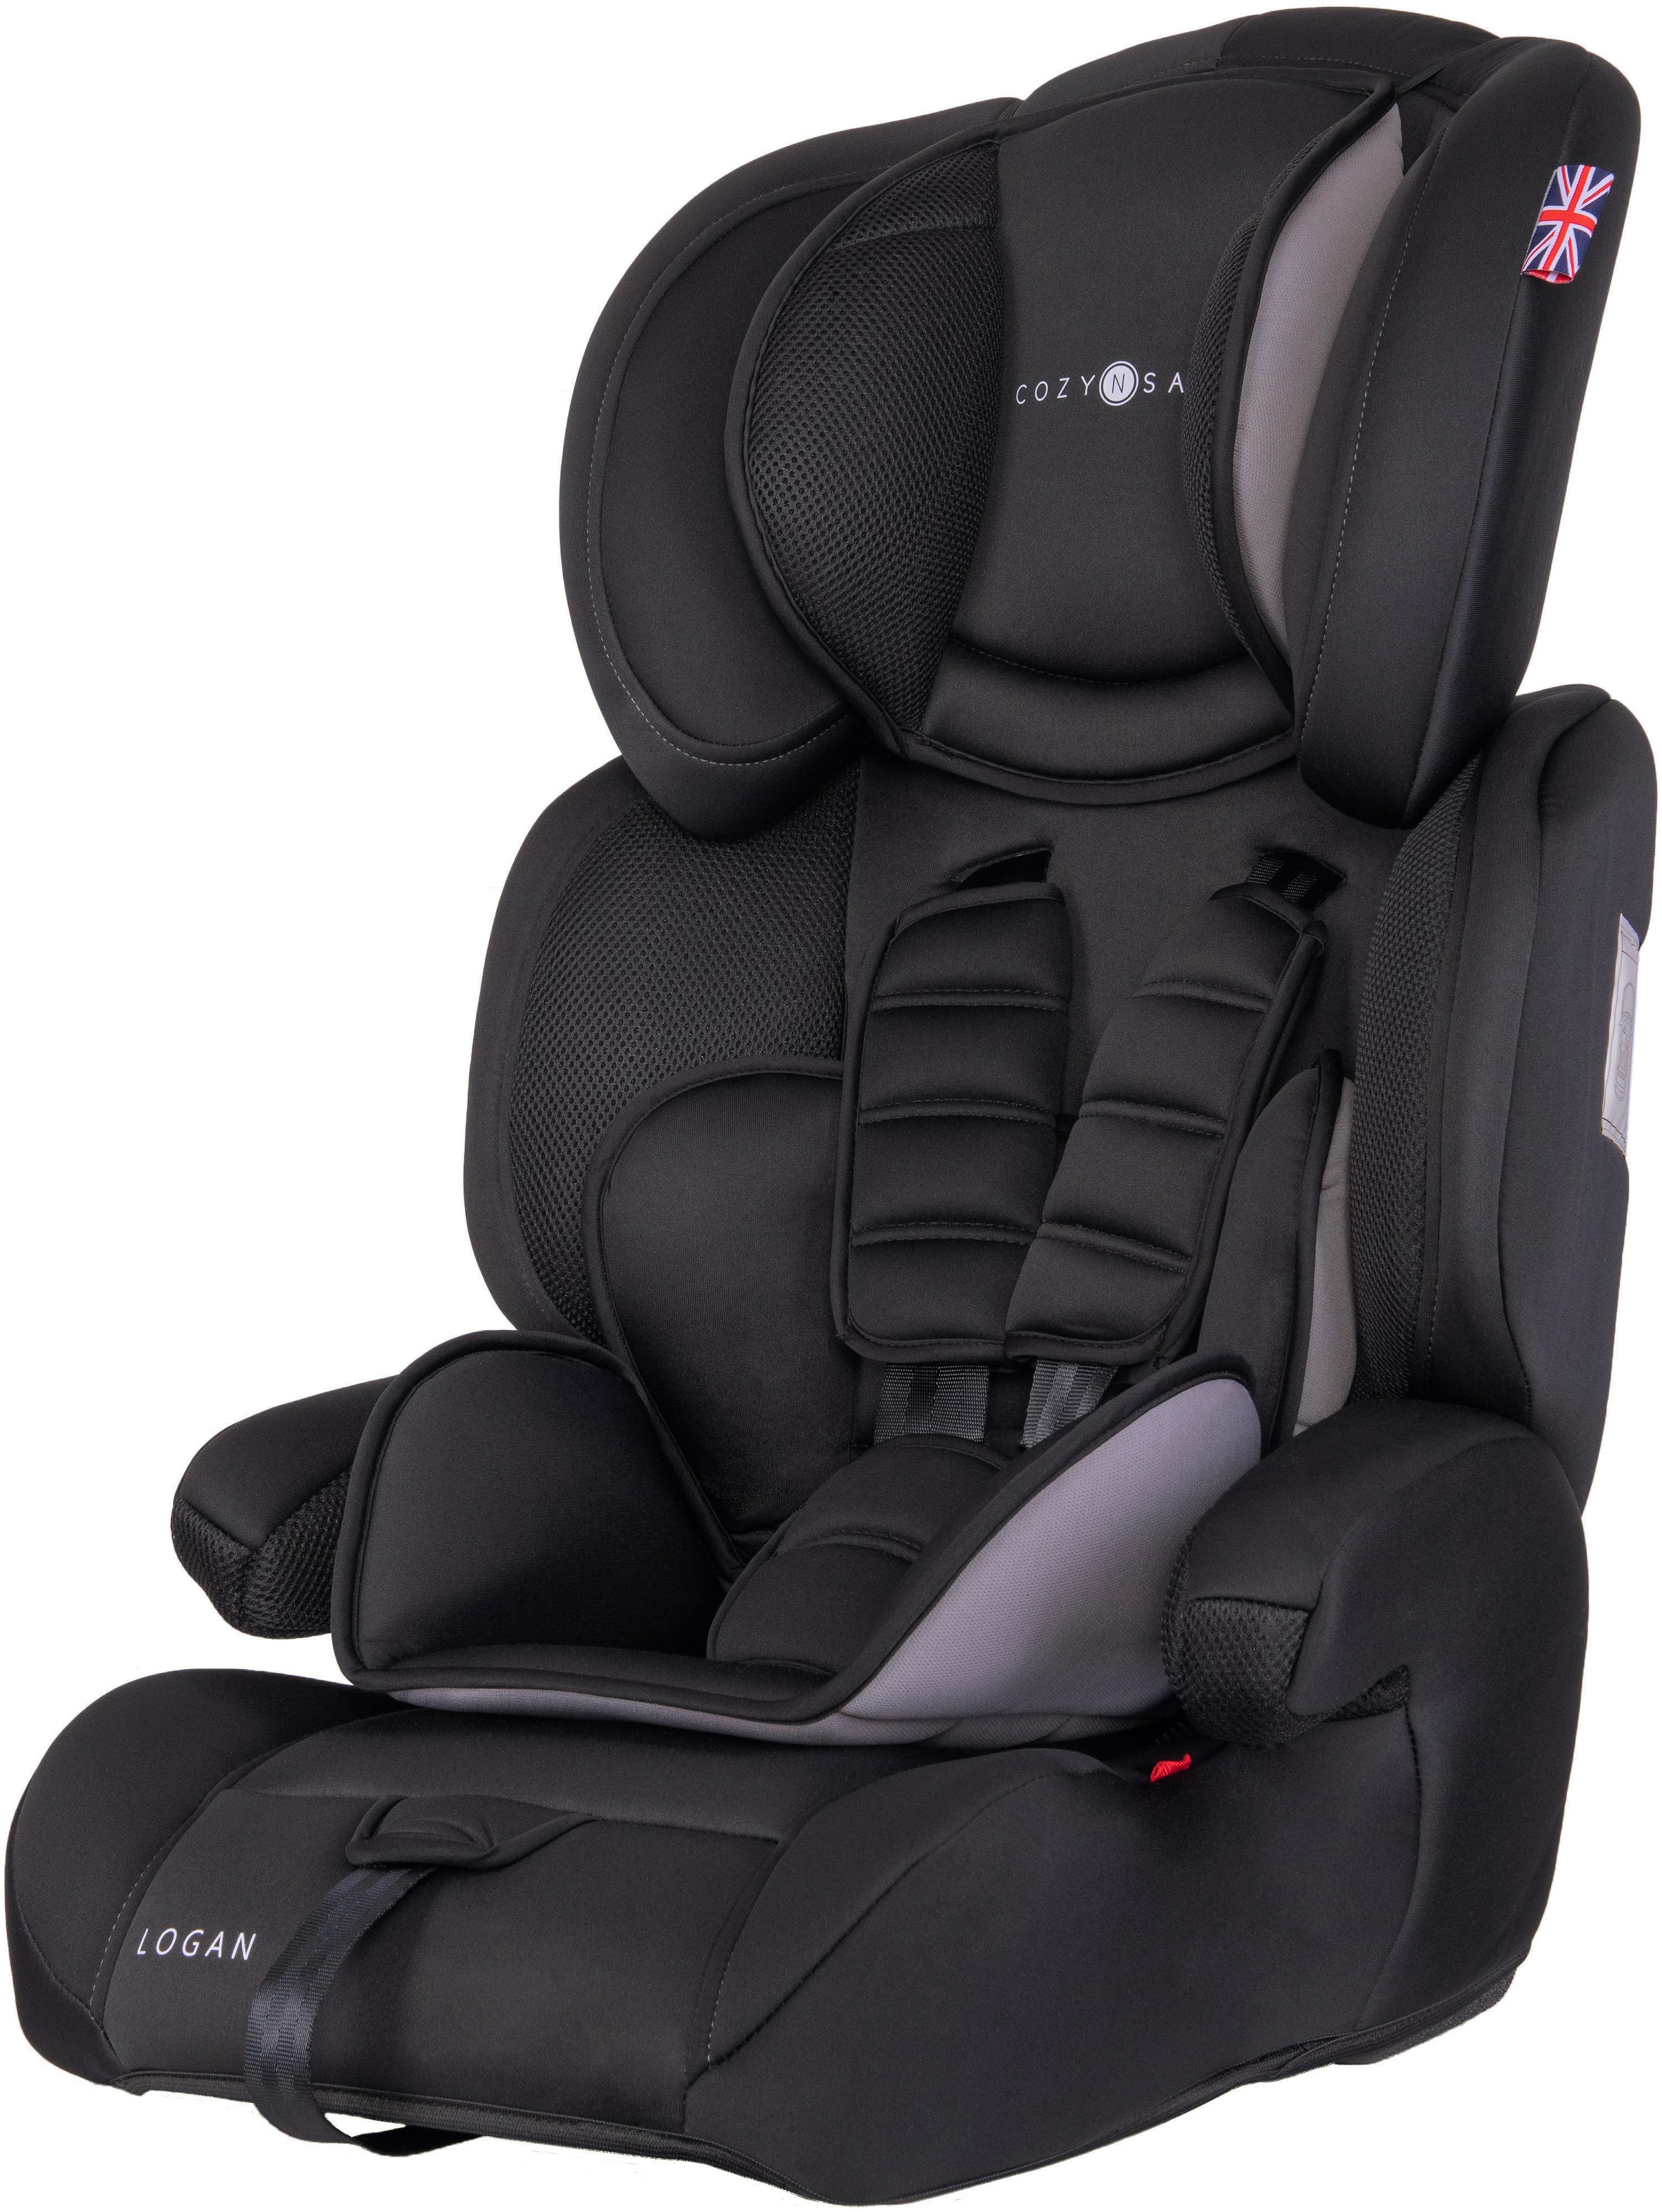 Cozy N Safe Logan Group 1/2/3 Child Car Seat - Black/Grey